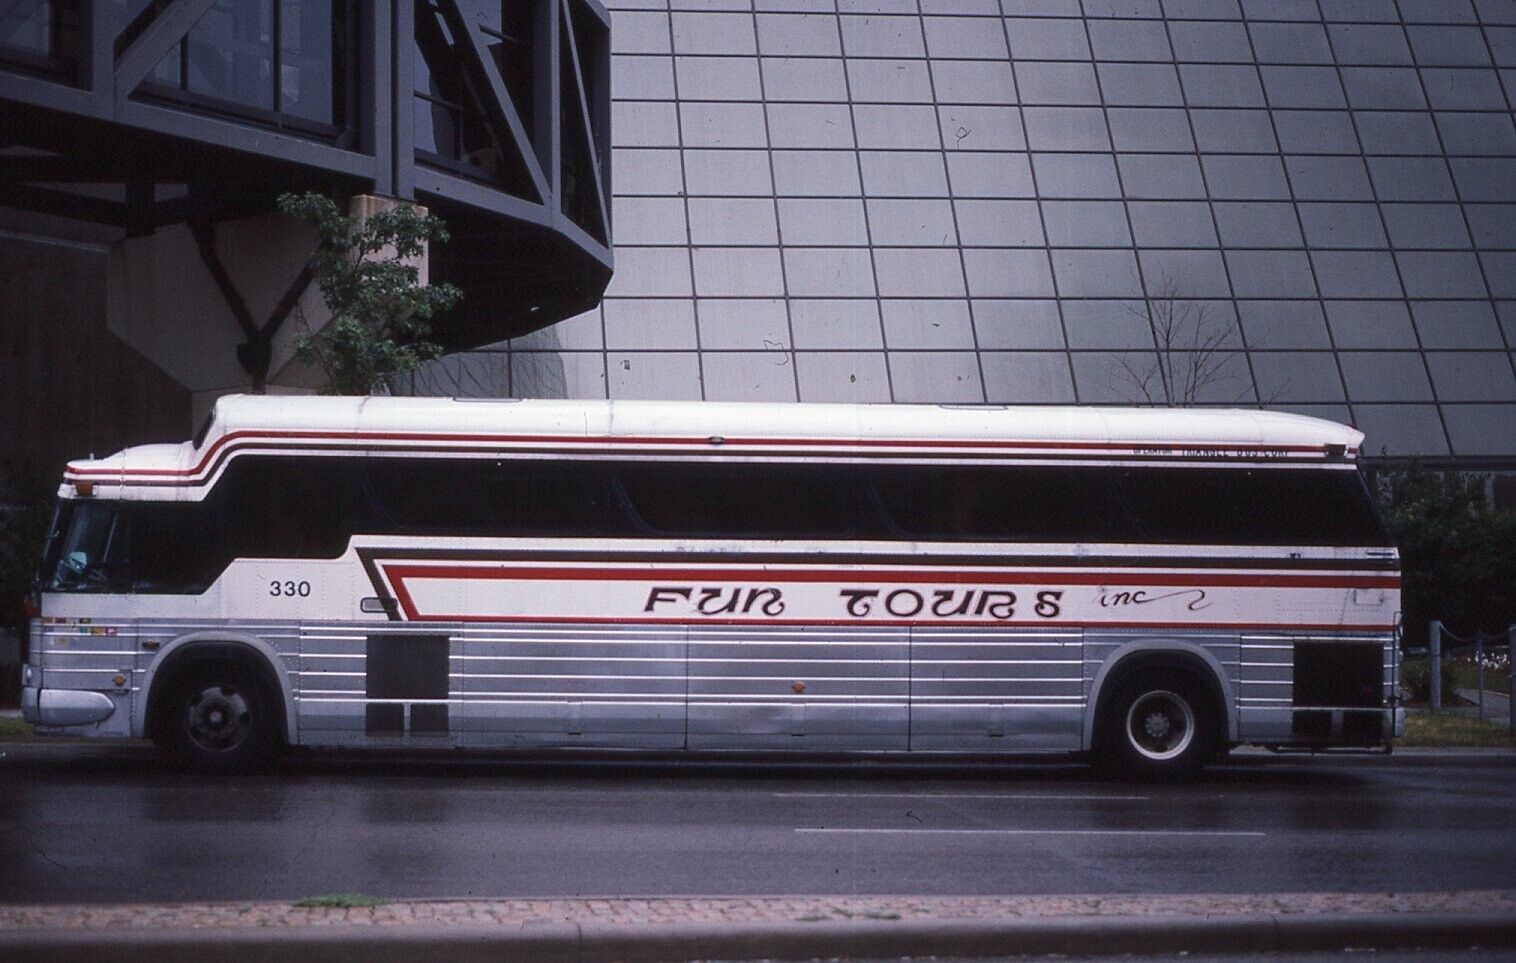 Original Bus Slide Fun Tours #330  Charter 1987  #26